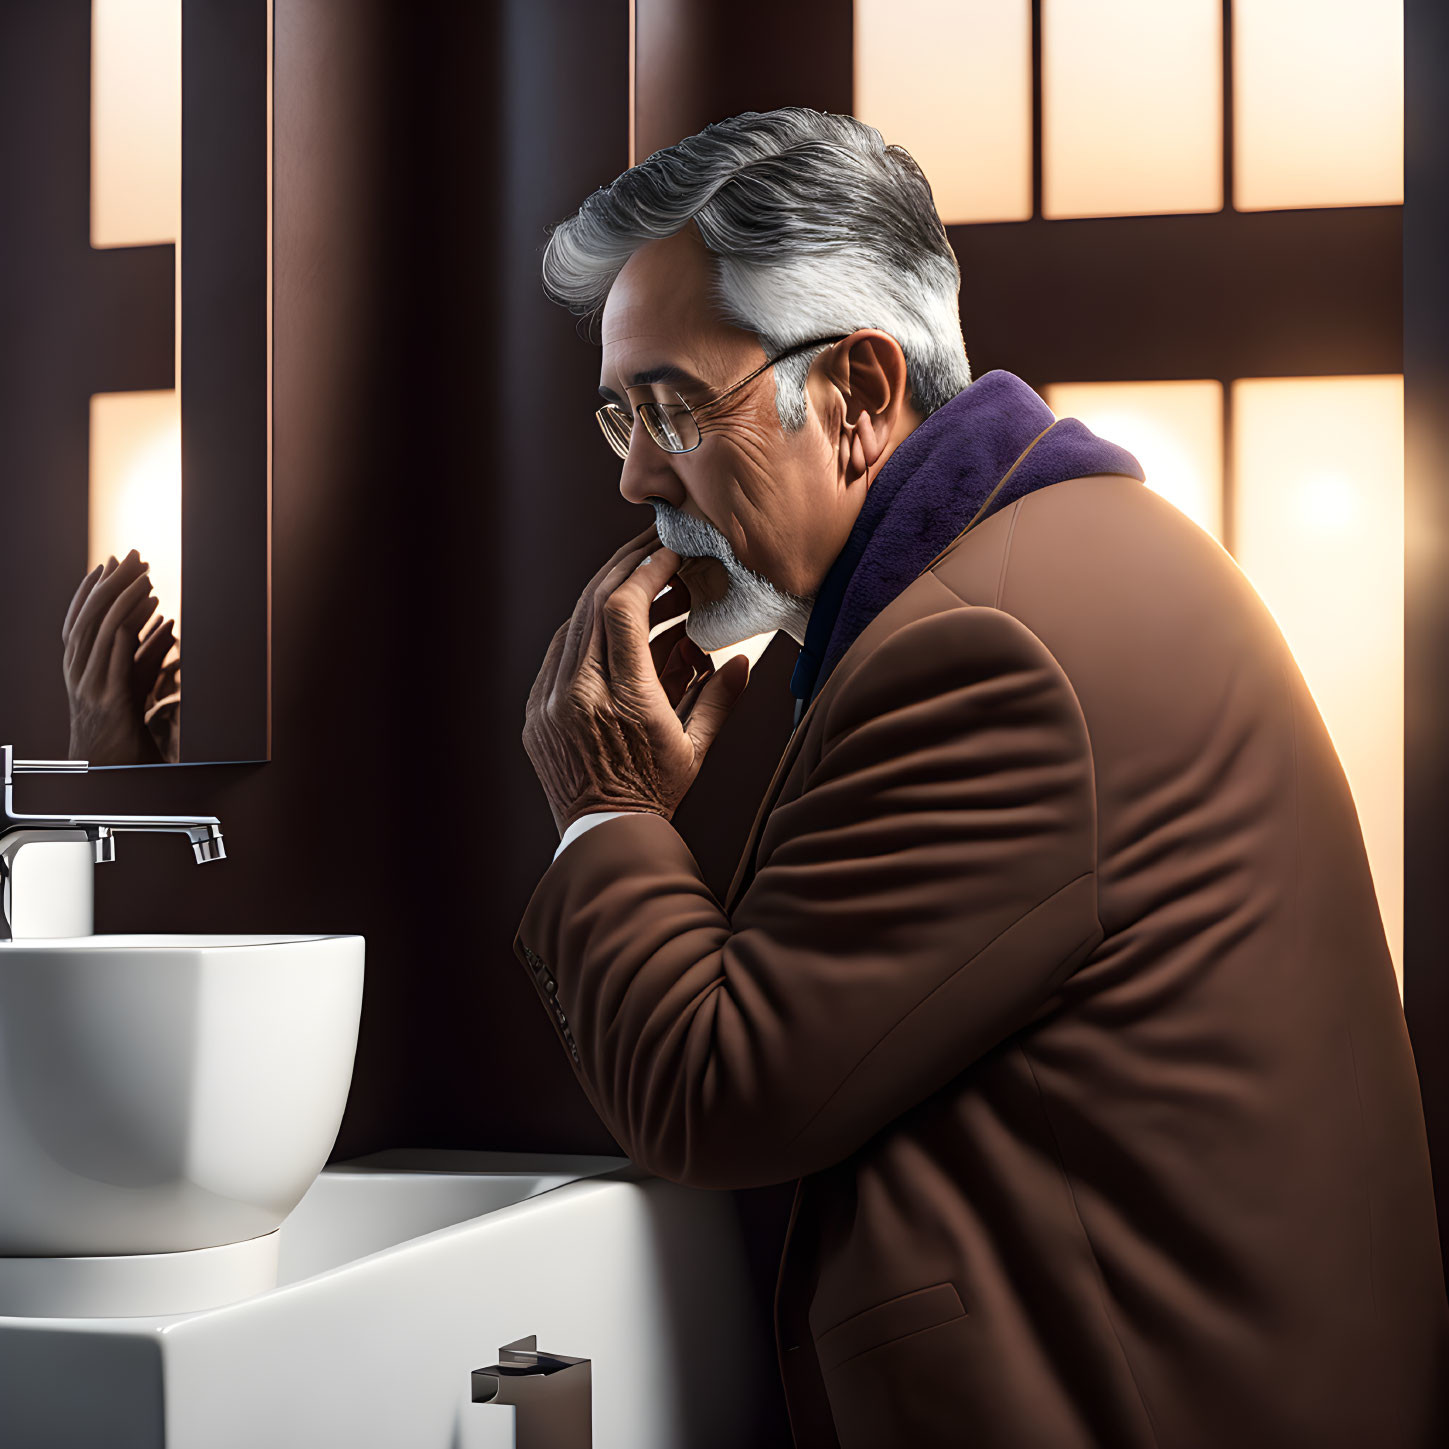 Elderly man in brown coat gazes at reflection in warm-lit bathroom mirror